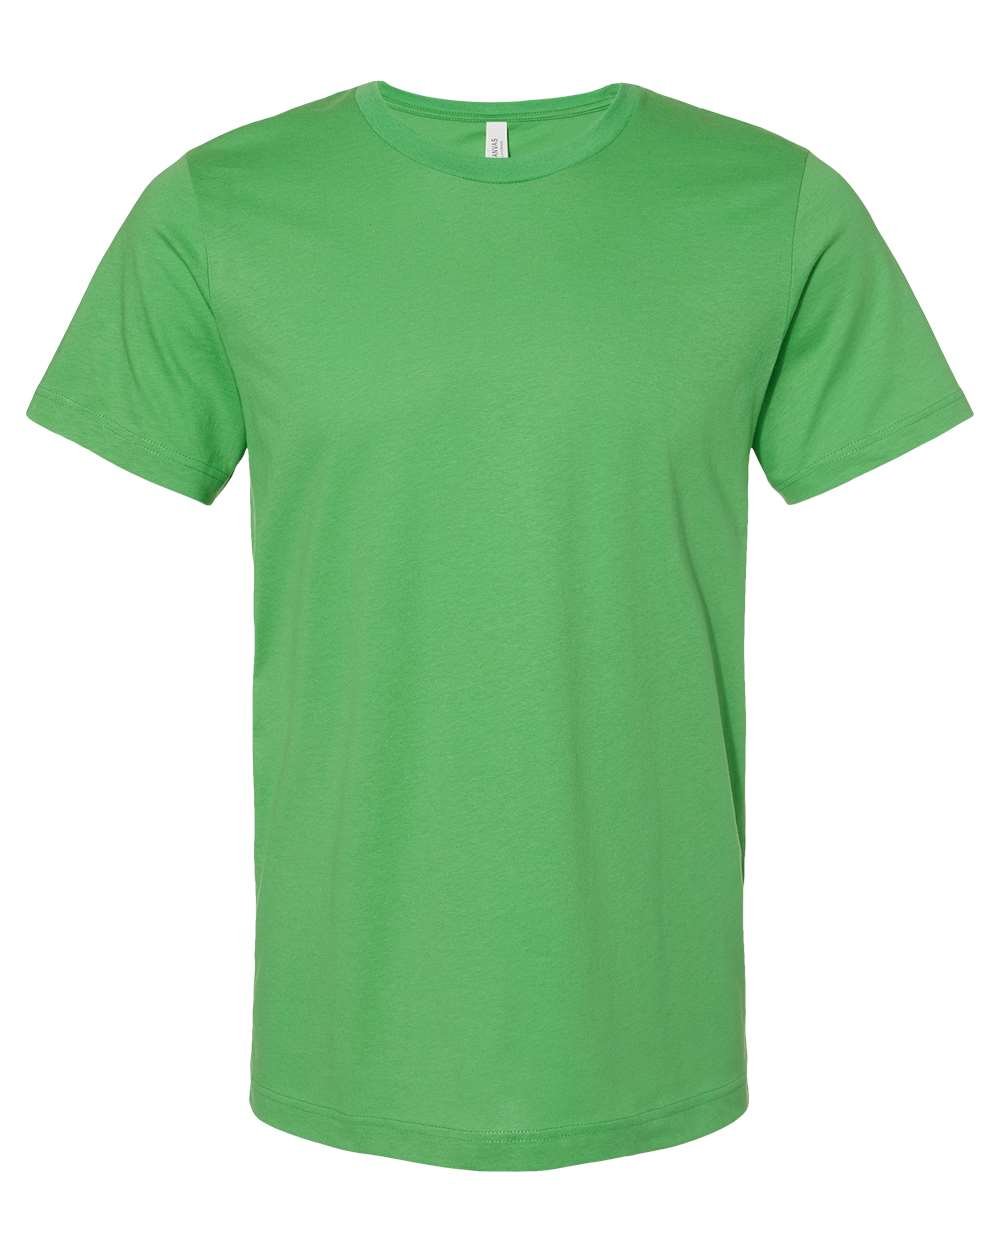 Bella + Canvas 3001 - Unisex Short Sleeve Jersey Tee $4.61 - T-Shirts